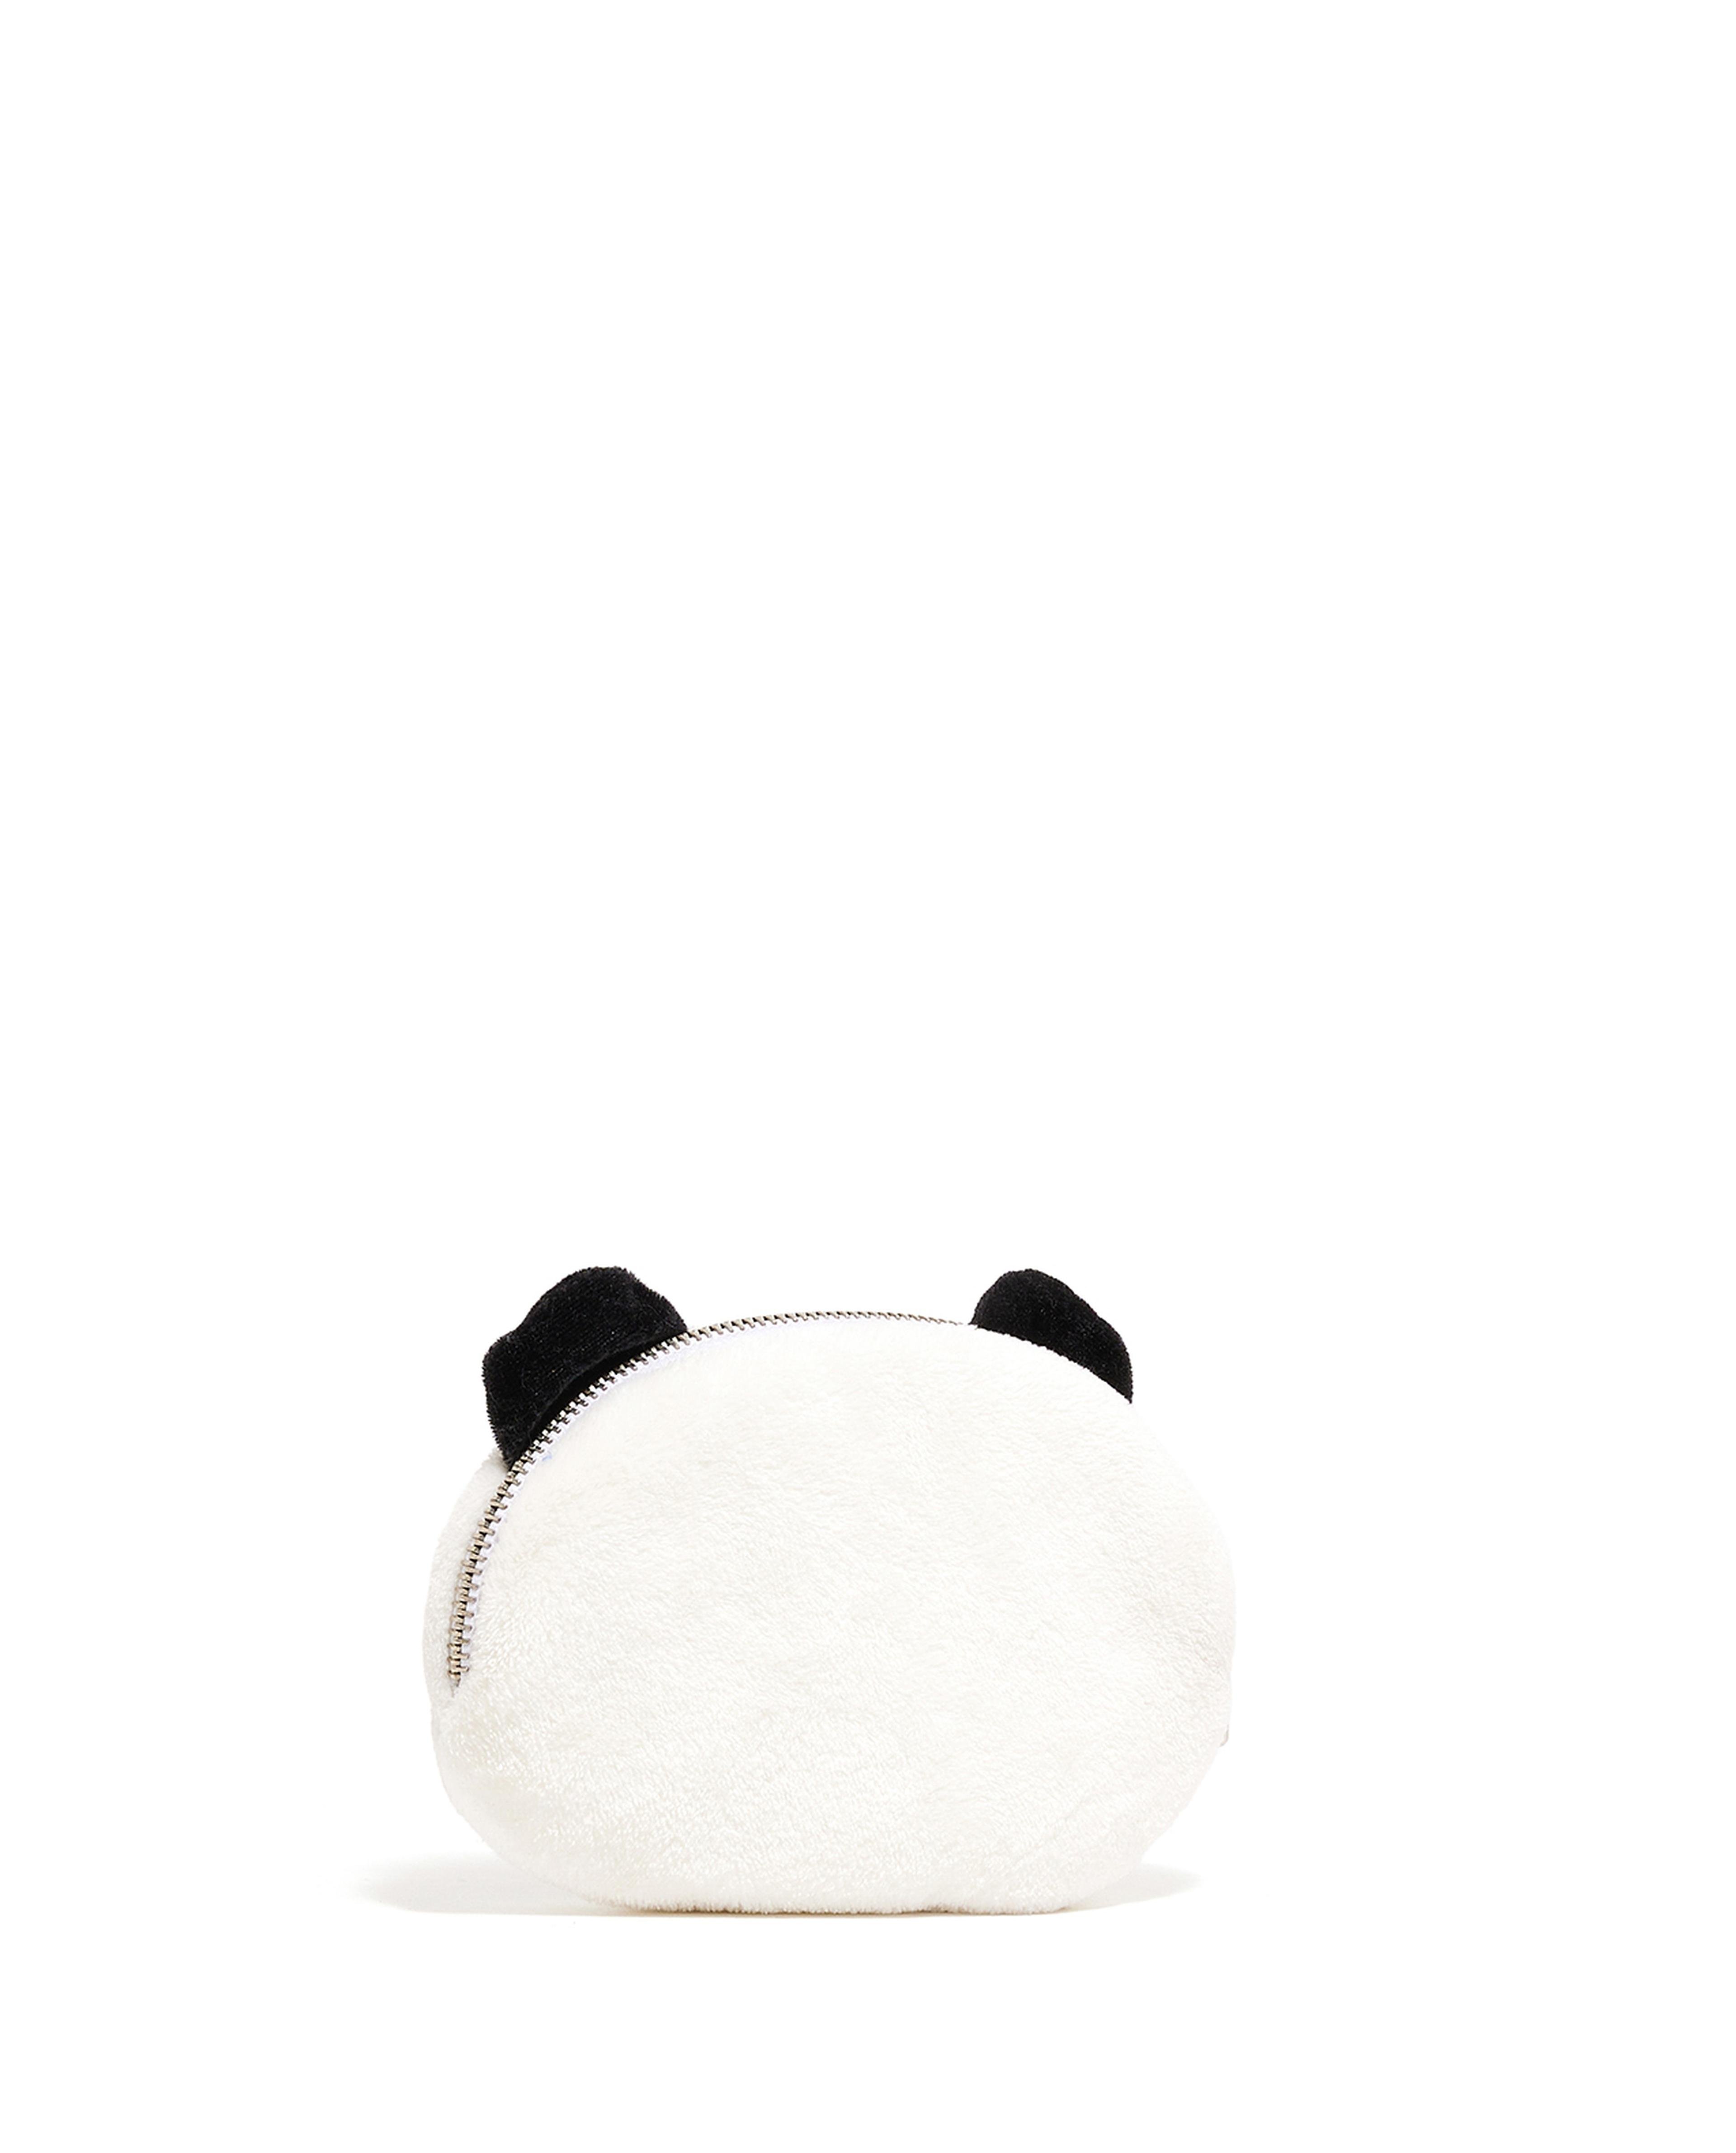 Panda Cosmetic Pouch